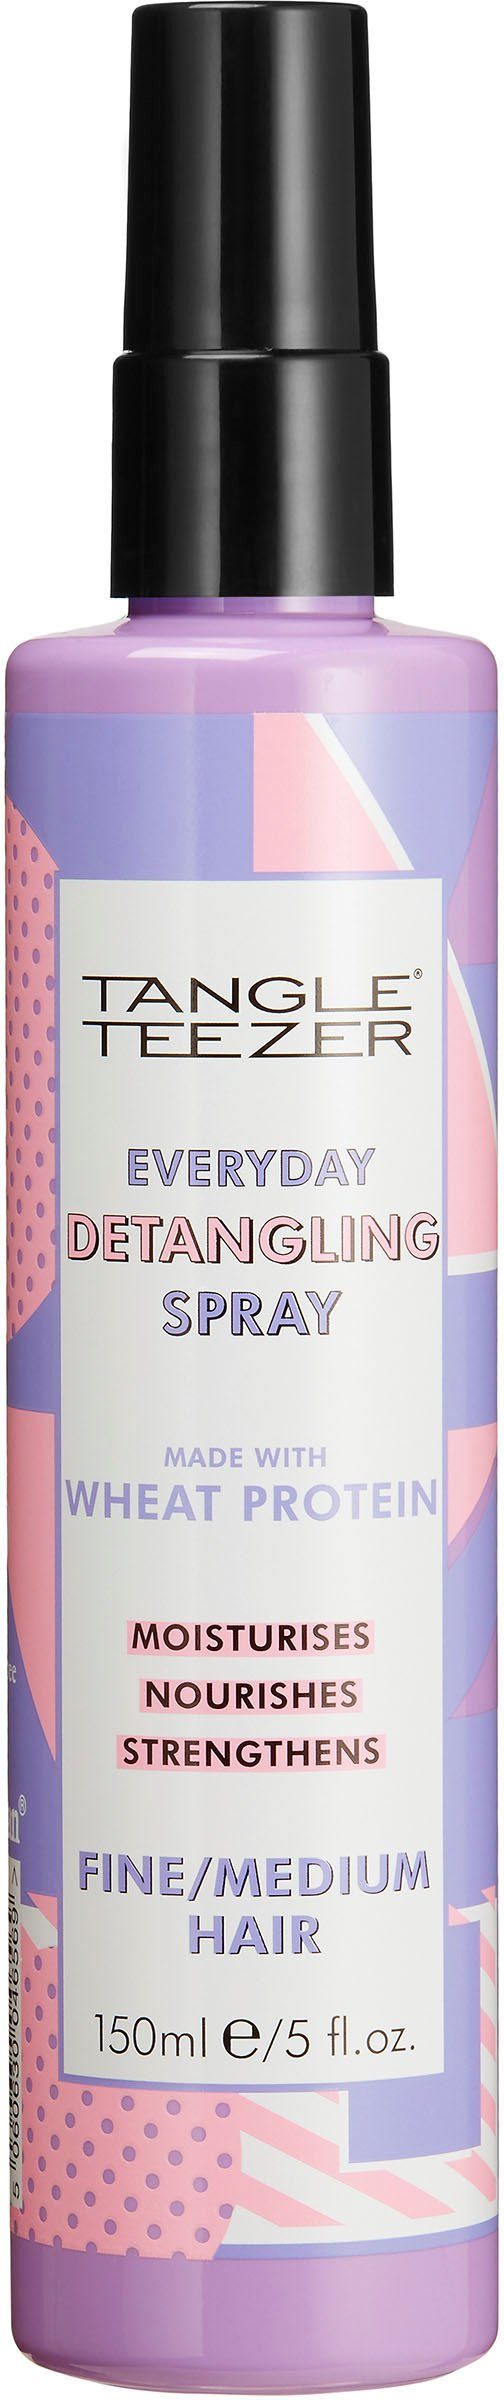 Haarpflege-Spray TEEZER Fine/Medium Hair Detangling TANGLE Everyday Spray